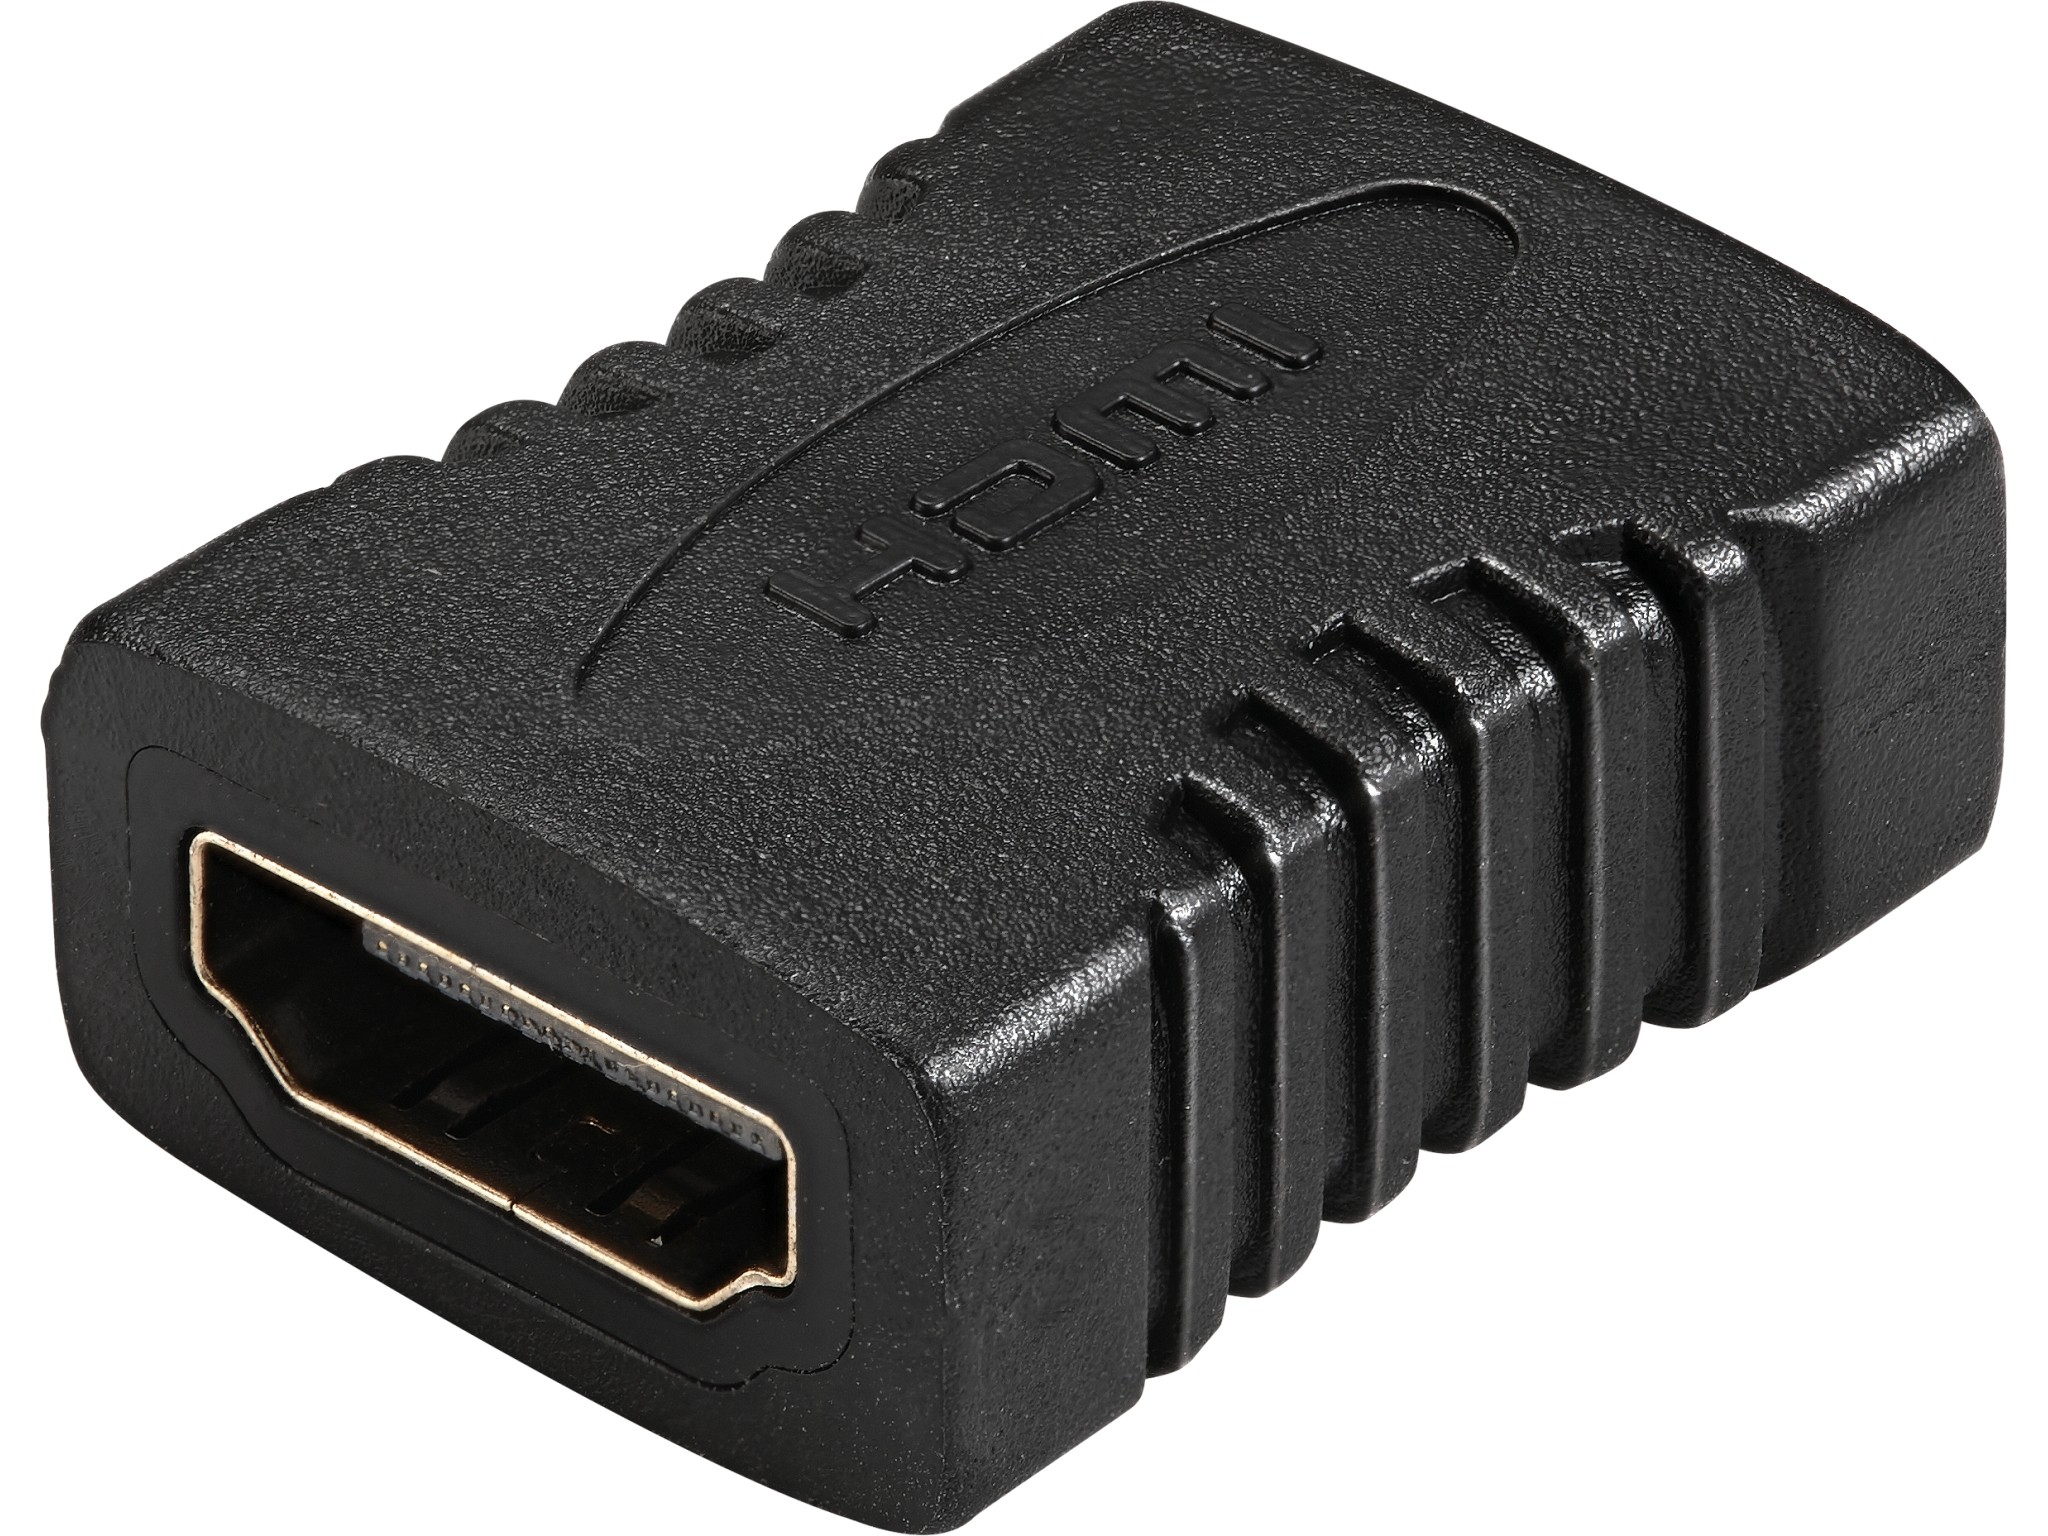 Sandberg HDMI 1.4 connection F/F - 508-74